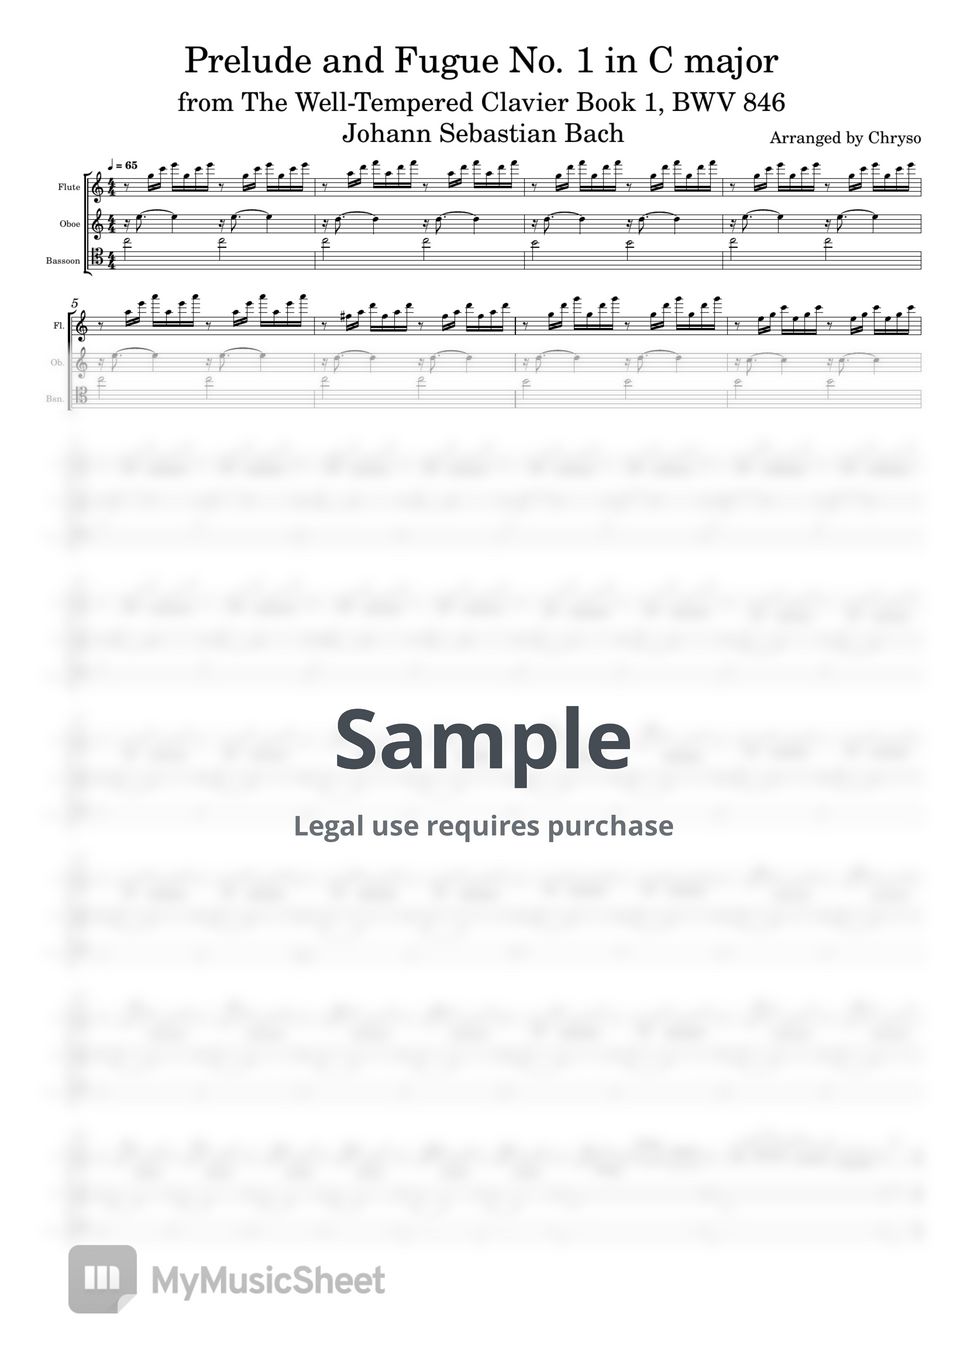 Johann Sebastian Bach - 27. Prelude and Fugue No. 1 in C major (pdf) by Chryso_Chrysoberyl